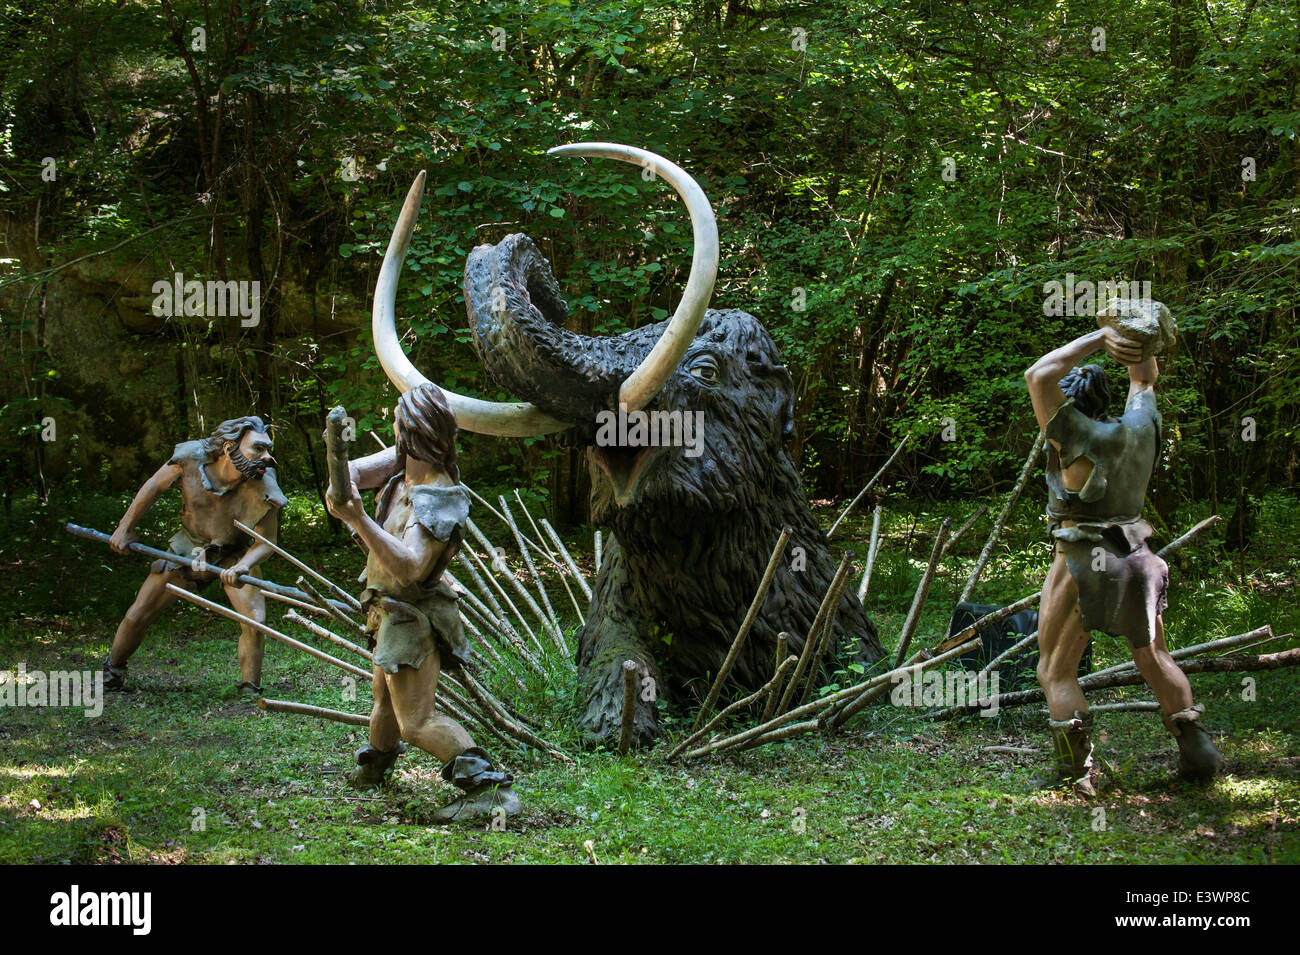 Neanderthal hunters killing trapped prehistoric mammoth at Prehisto Parc, Tursac, Périgord, Dordogne, France Stock Photo